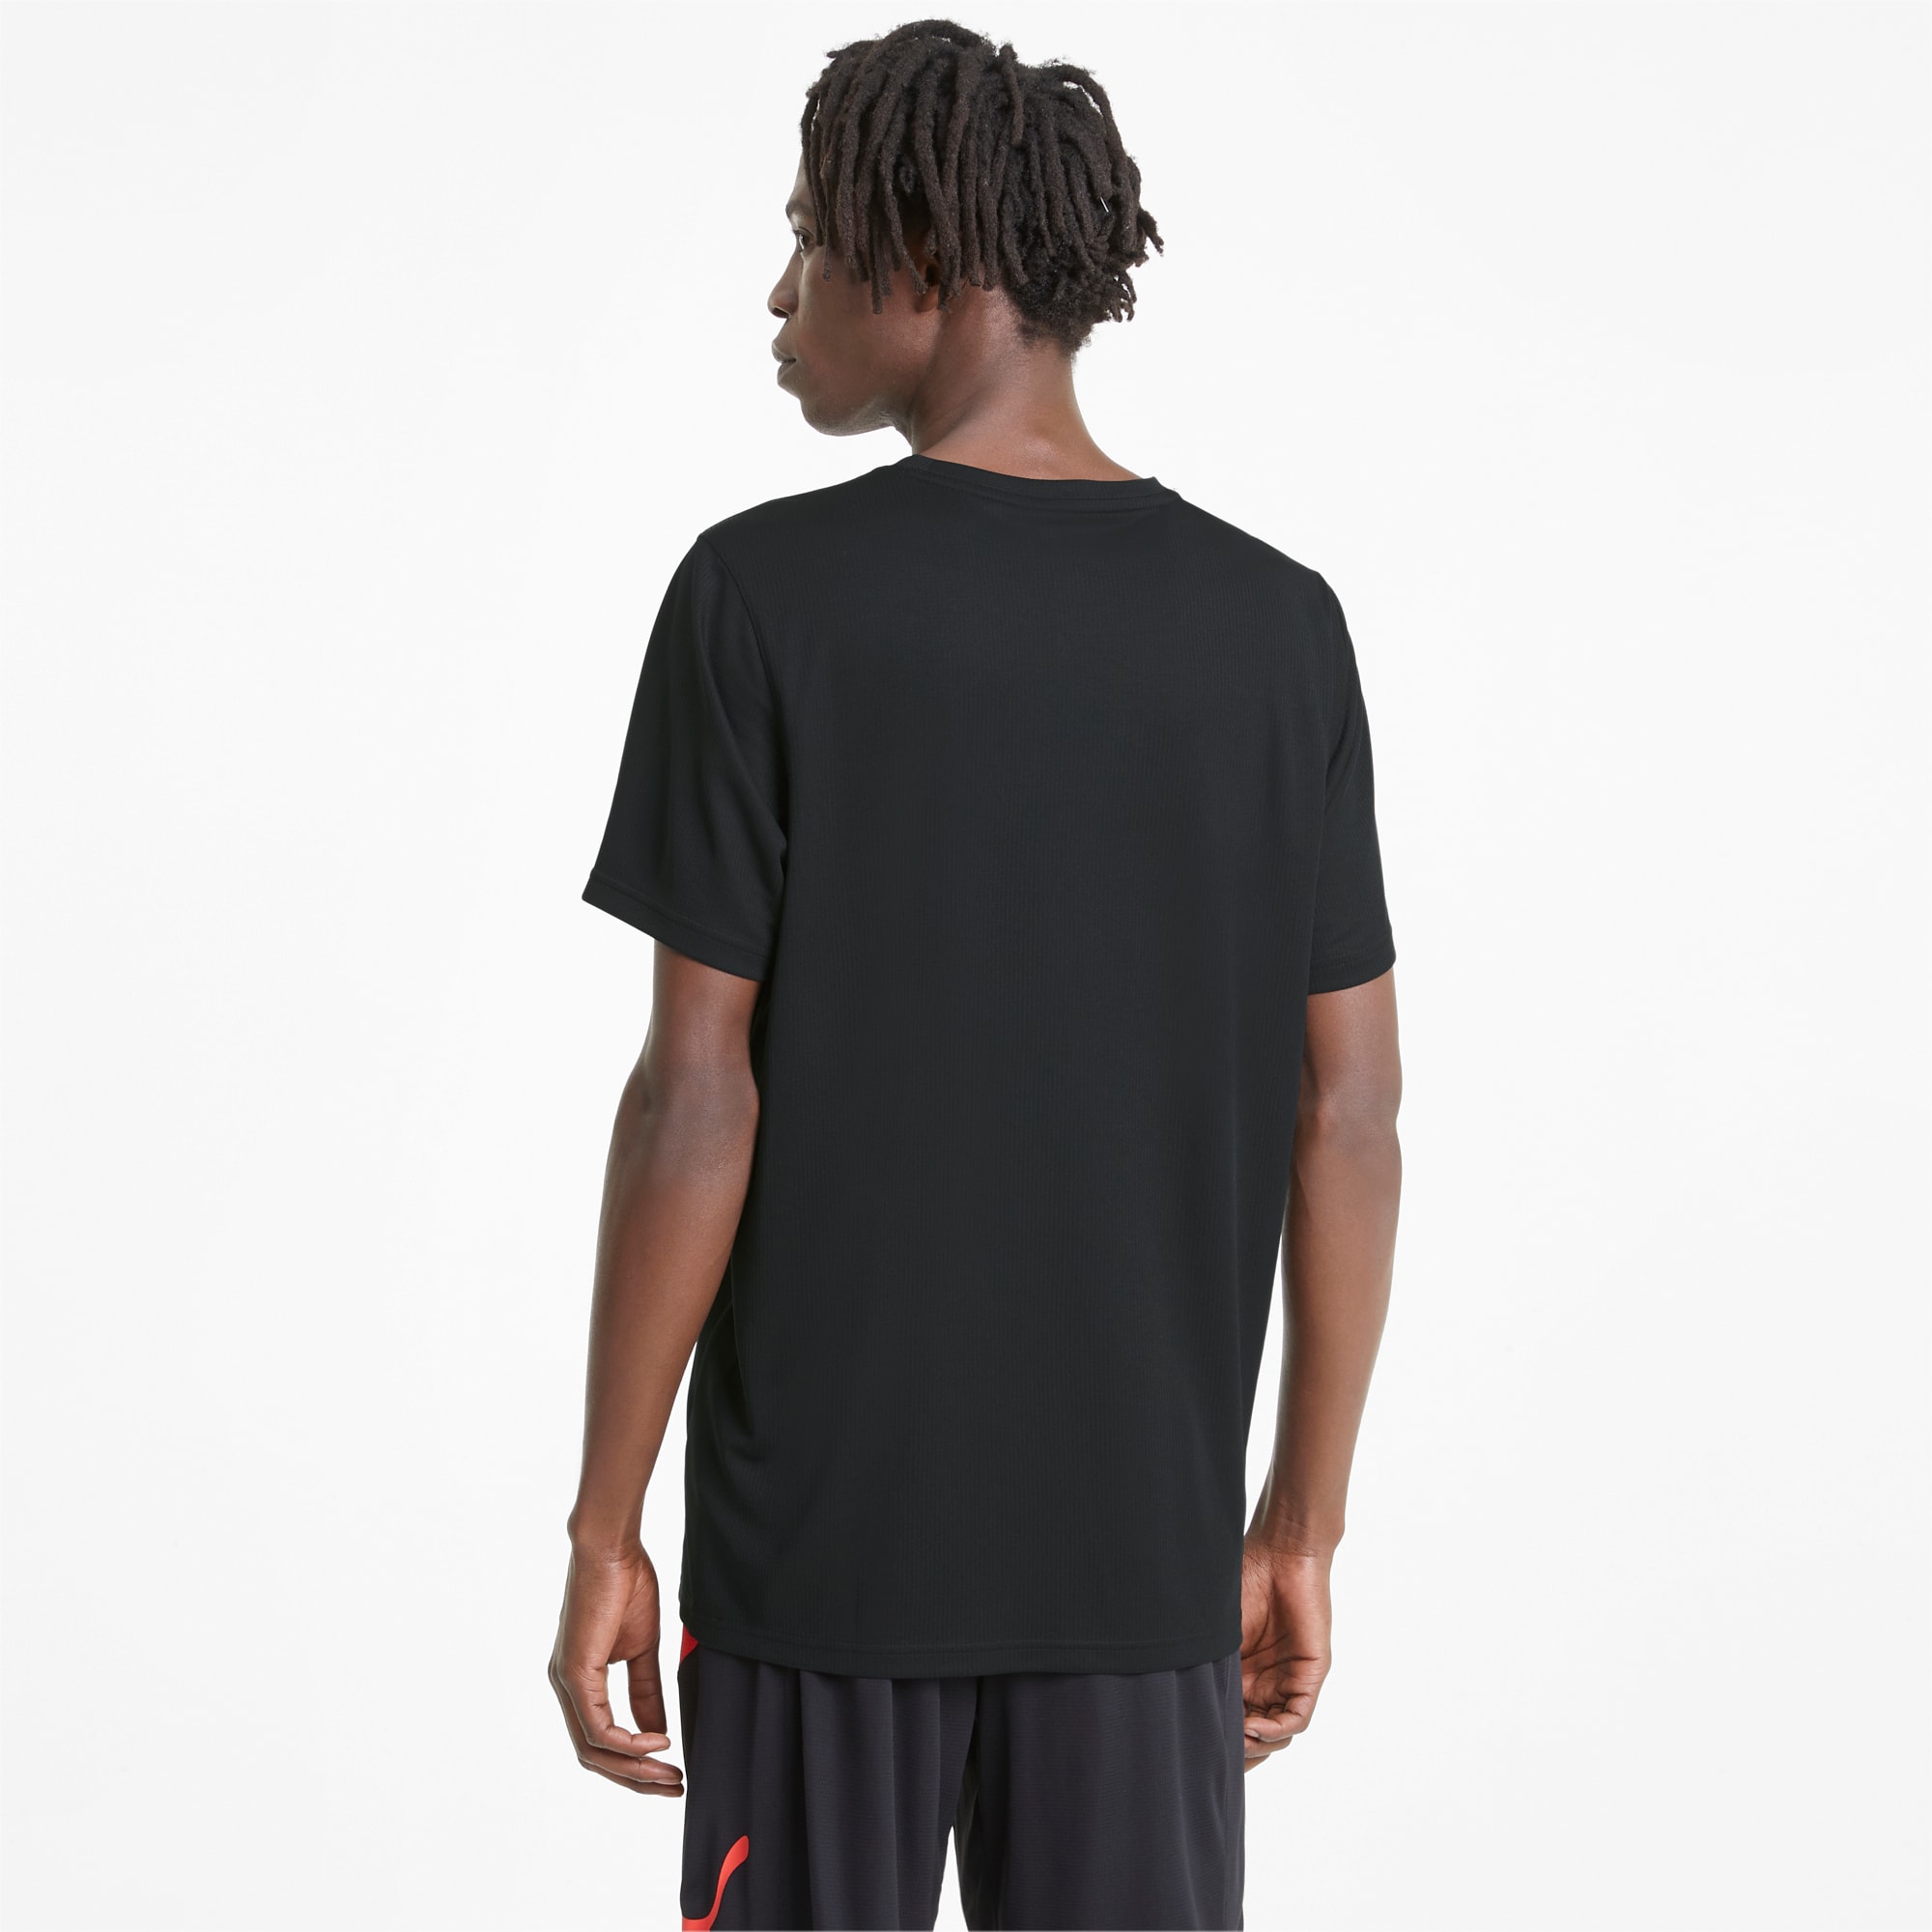 PUMA Performance Short Sleeve Men's Training T-Shirt, Black, Size 3XL, Clothing